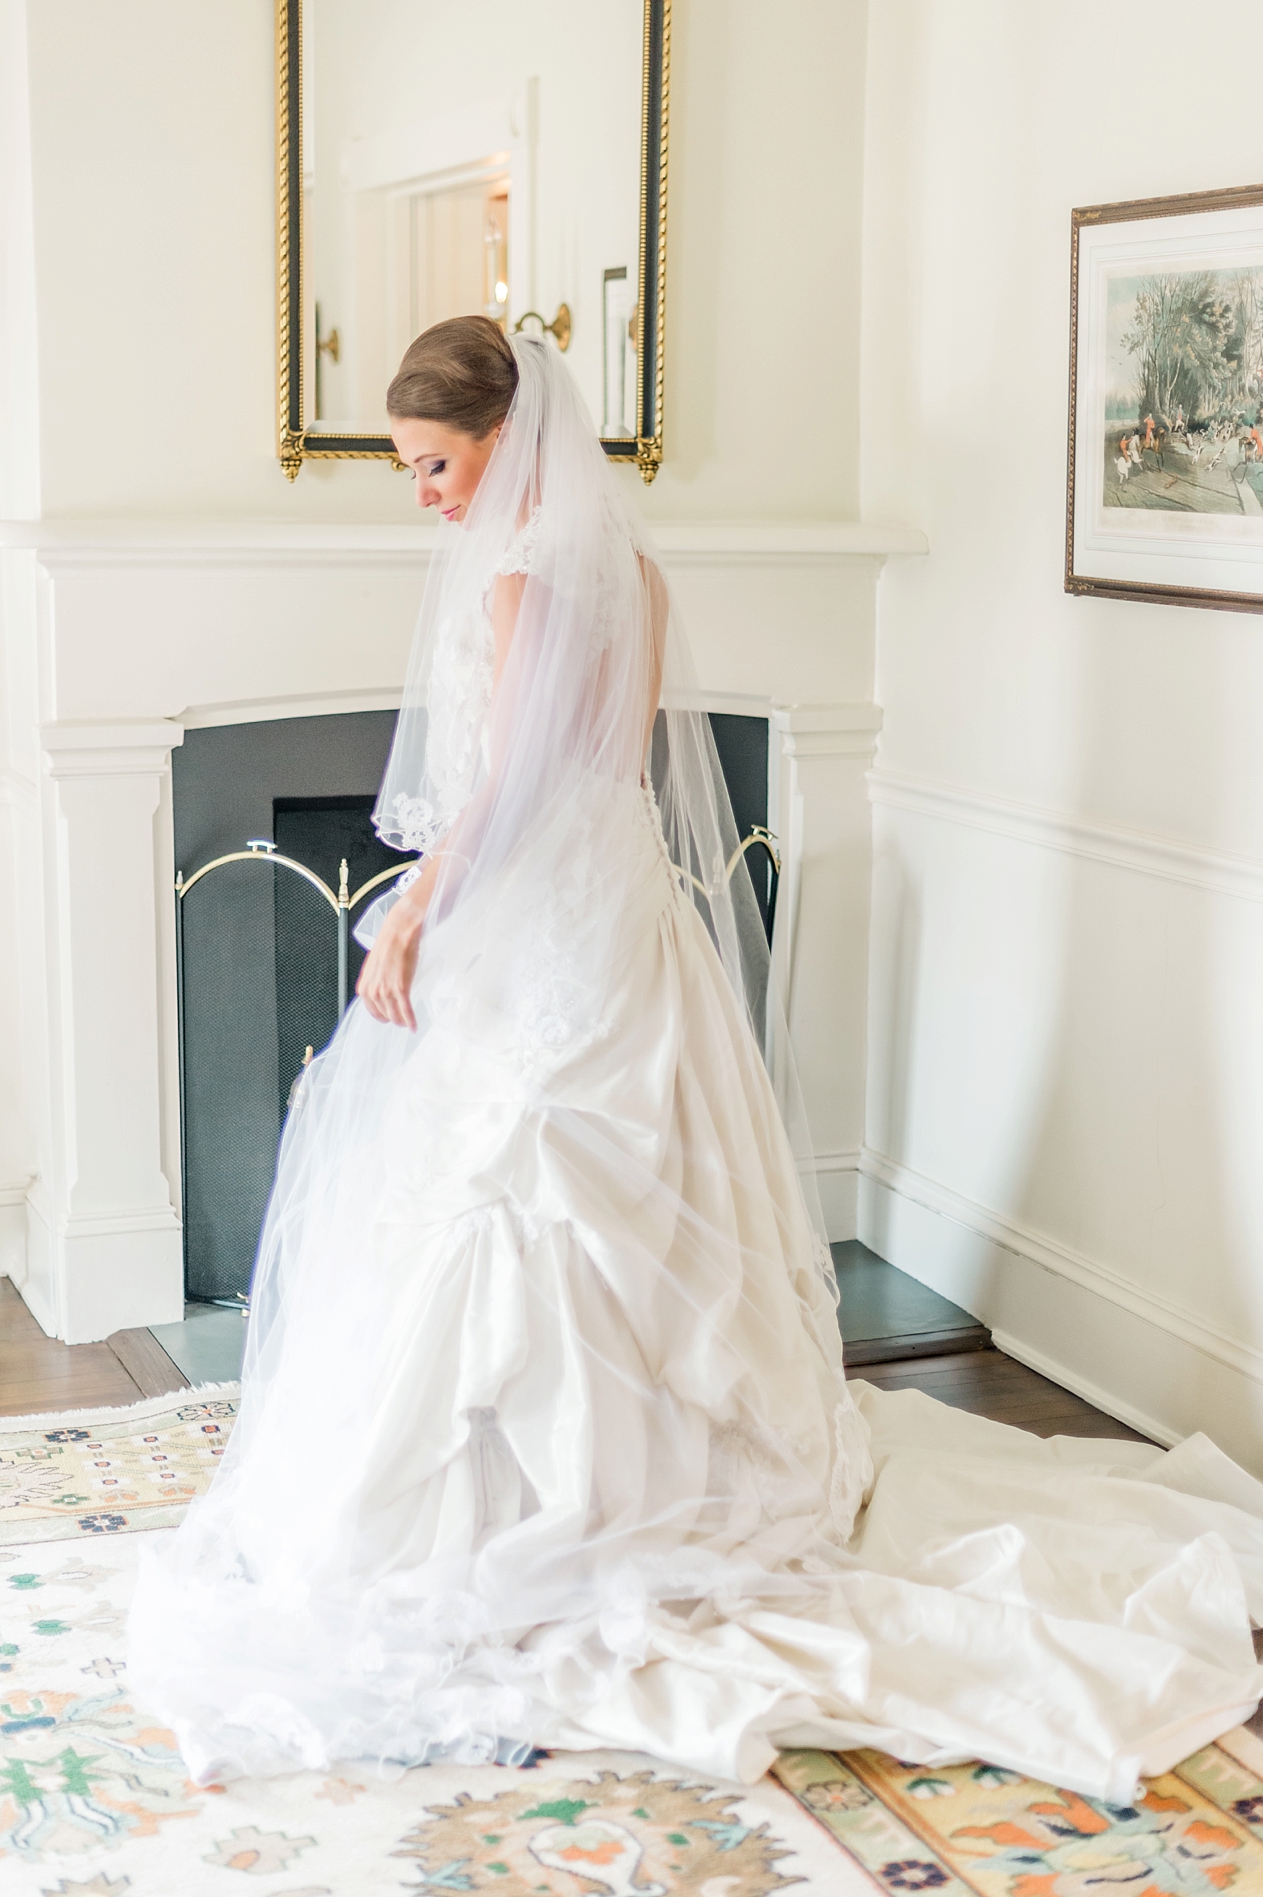 A Classic and Romantic Birkby House, Leesburg Virginia wedding by Fine Art Photographer Lauren R Swann